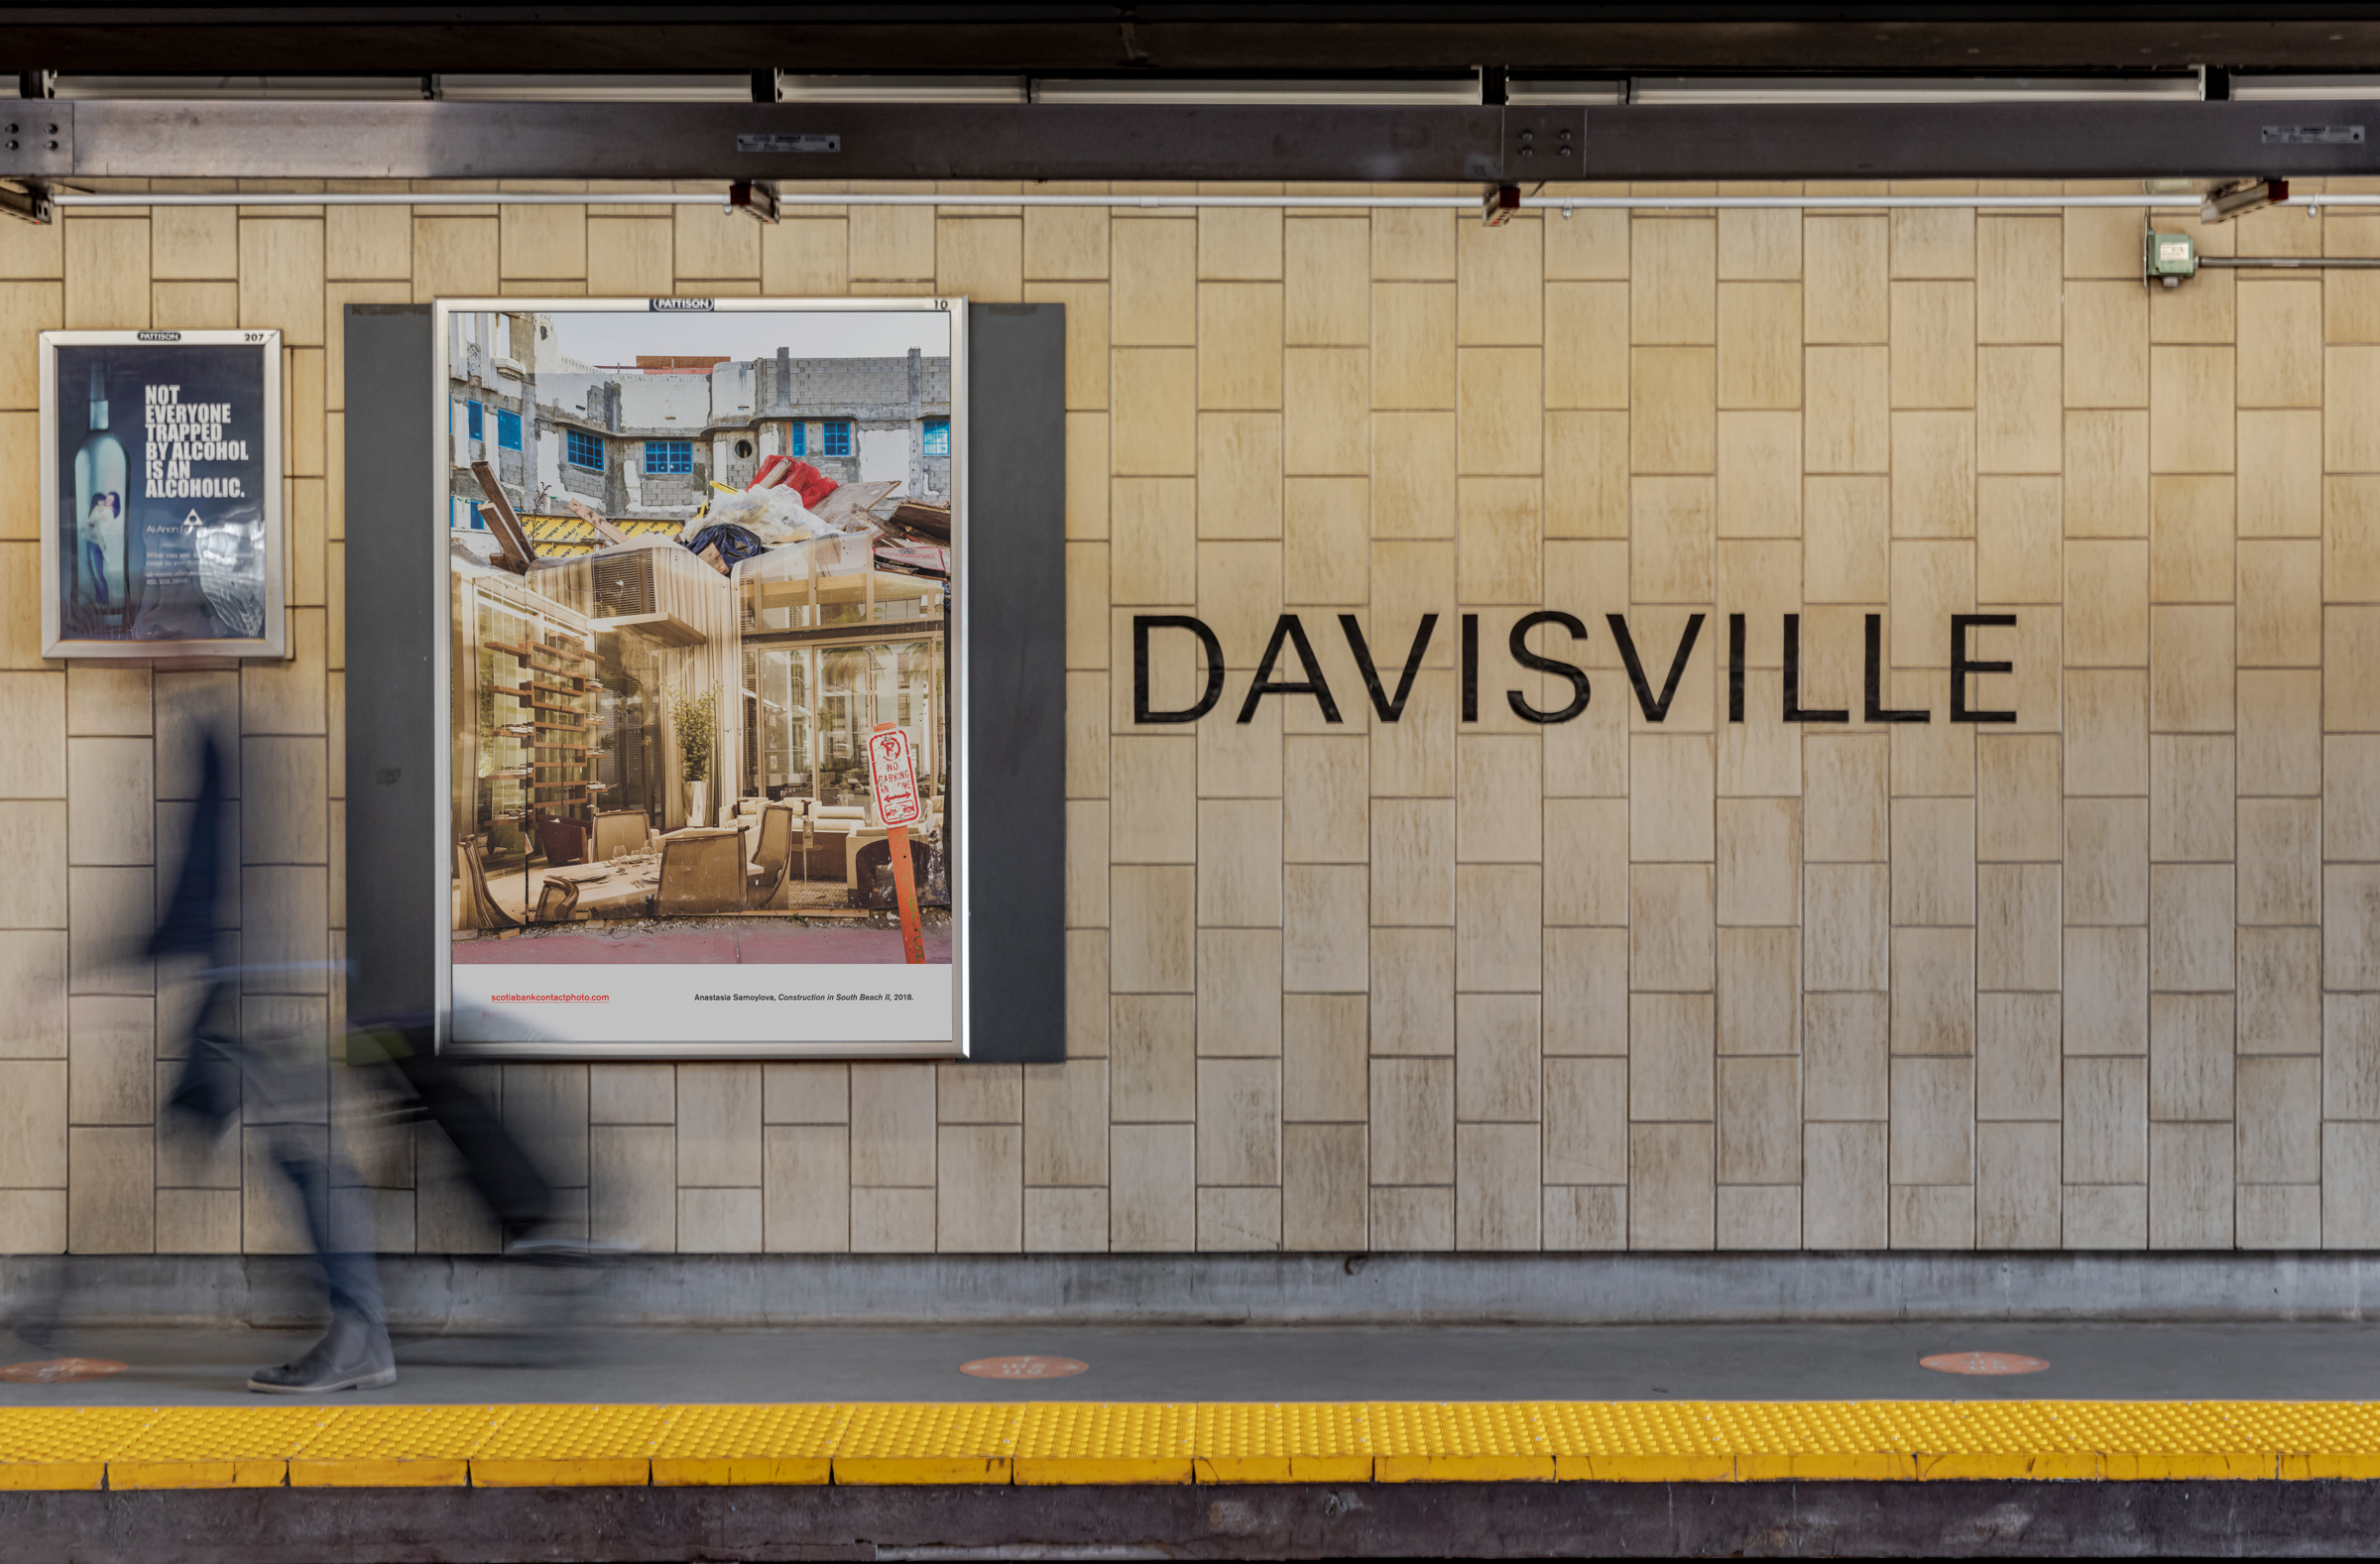     Anastasia Samoylova, FloodZone, installation at Davisville Subway Station, Toronto, 2022. Courtesy of the artist and CONTACT. Photo: Toni Hafkenscheid

